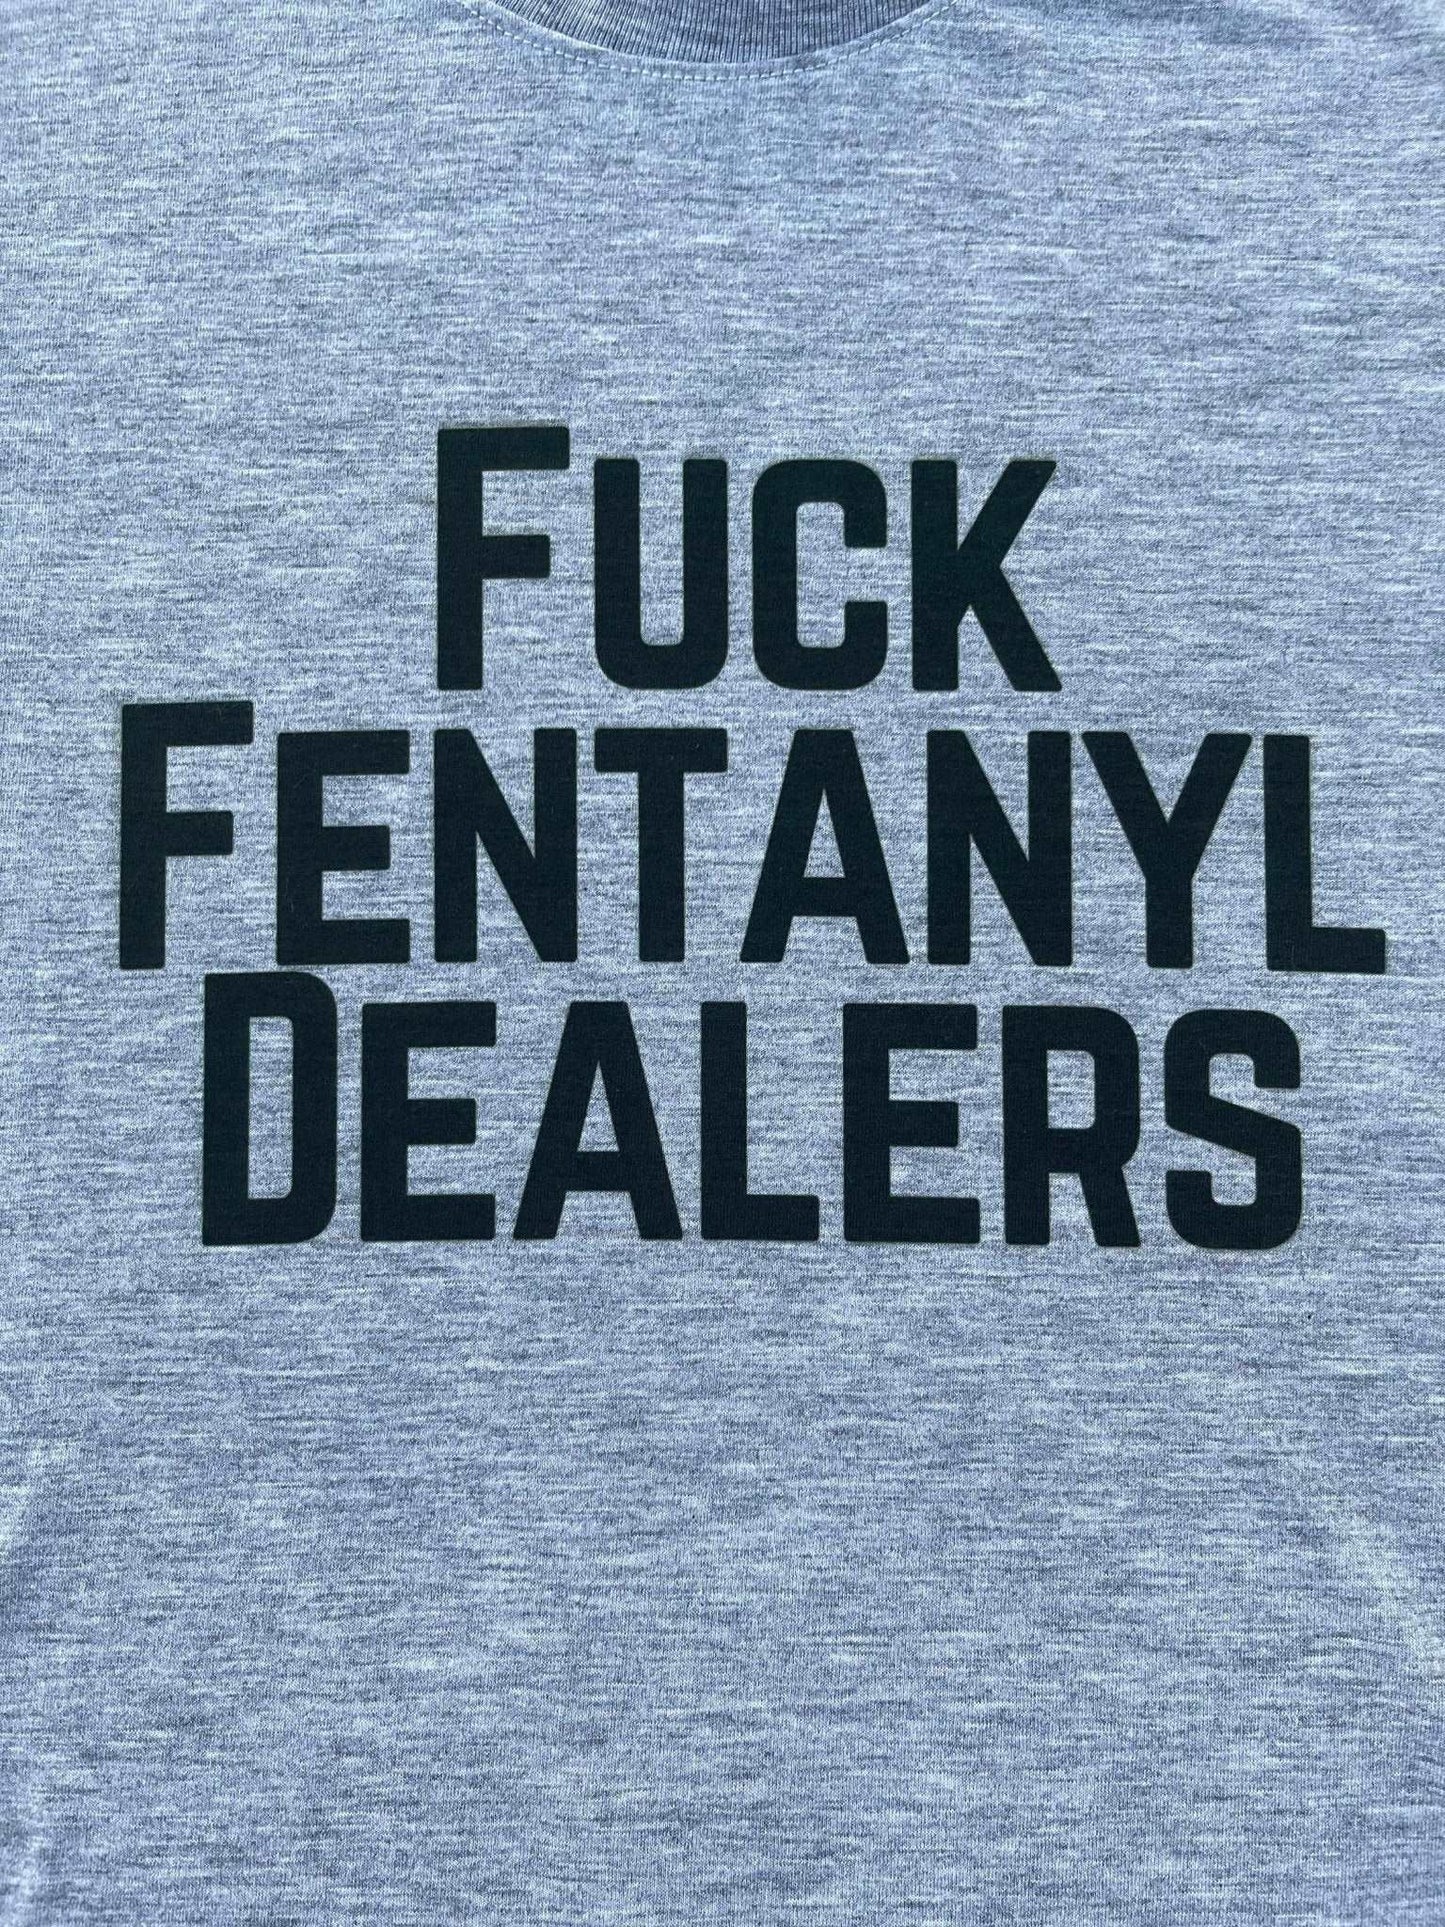 Fuck Fentanyl Dealers Shirt